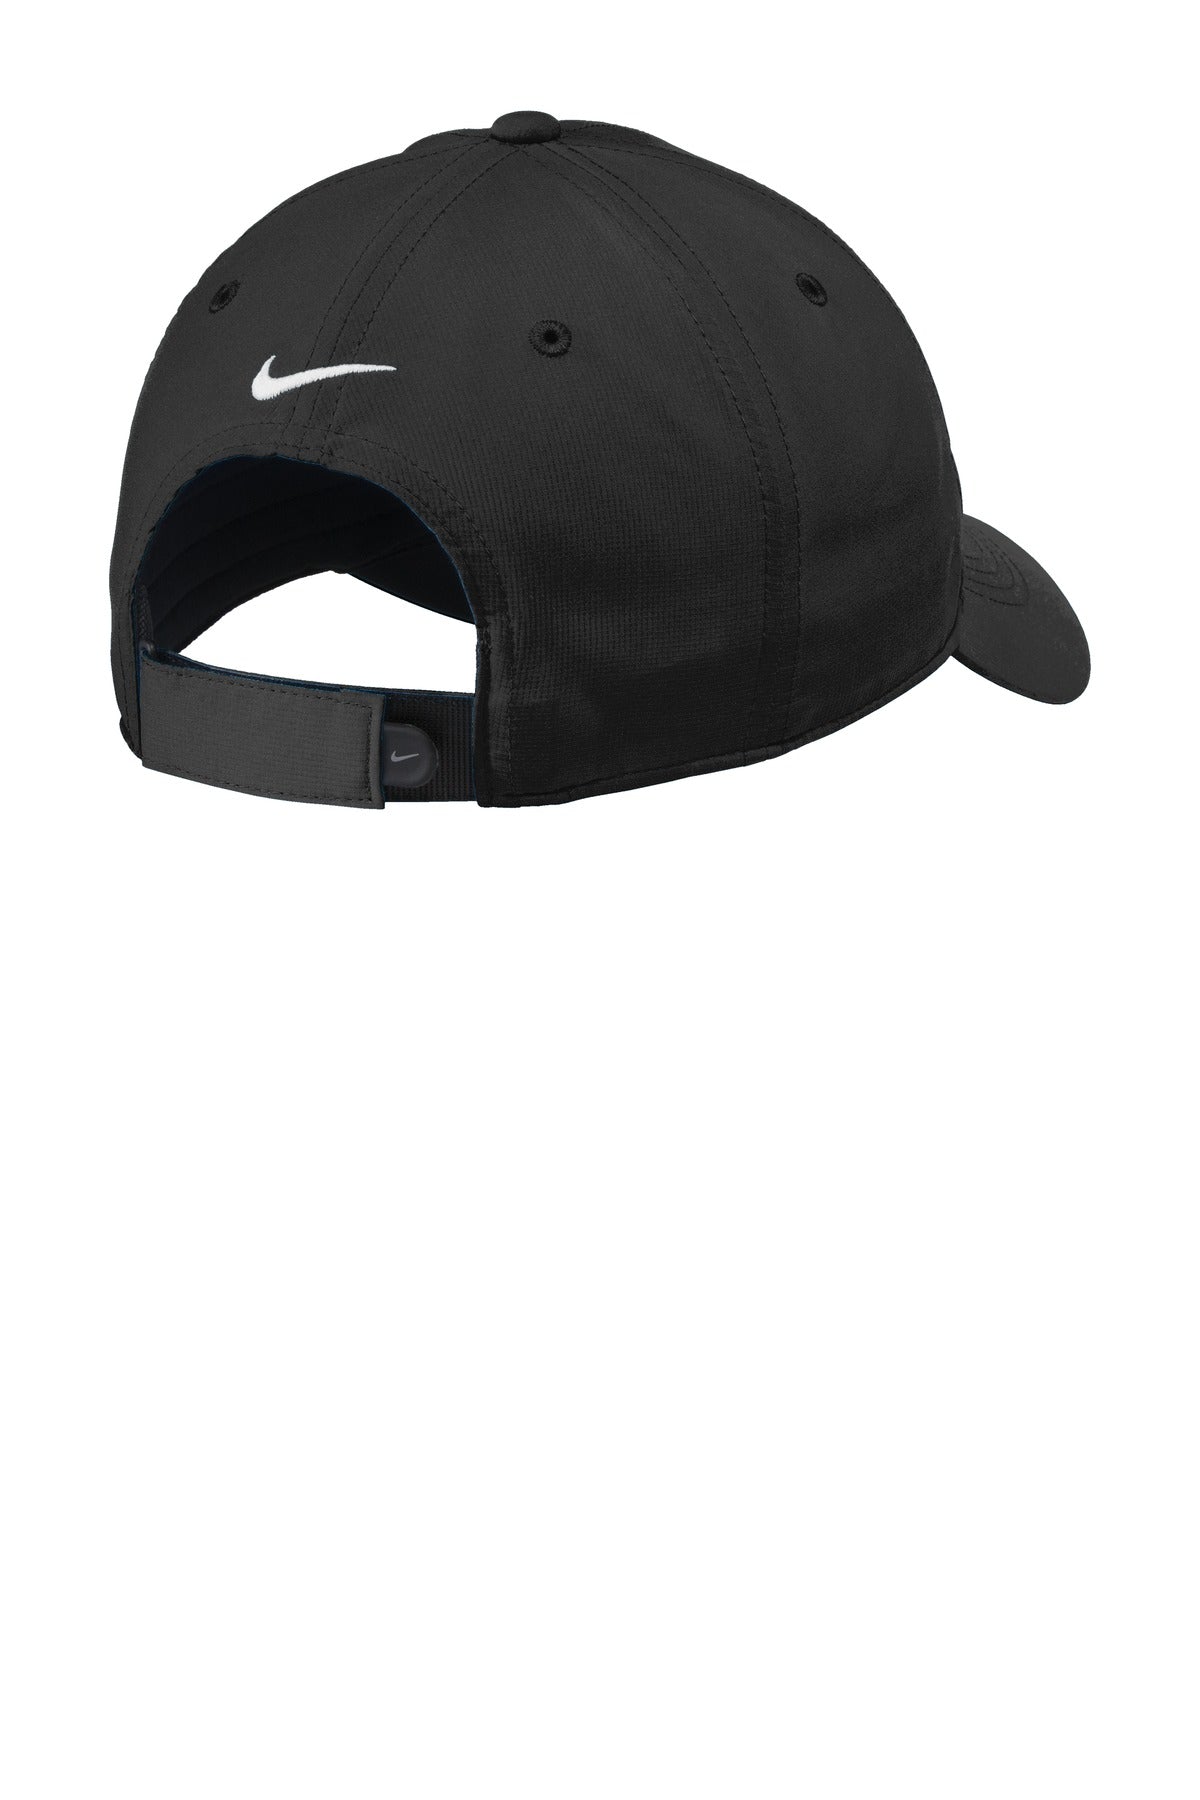 Nike Dri-FIT Tech Cap. NKAA1859 - BT Imprintables Shirts